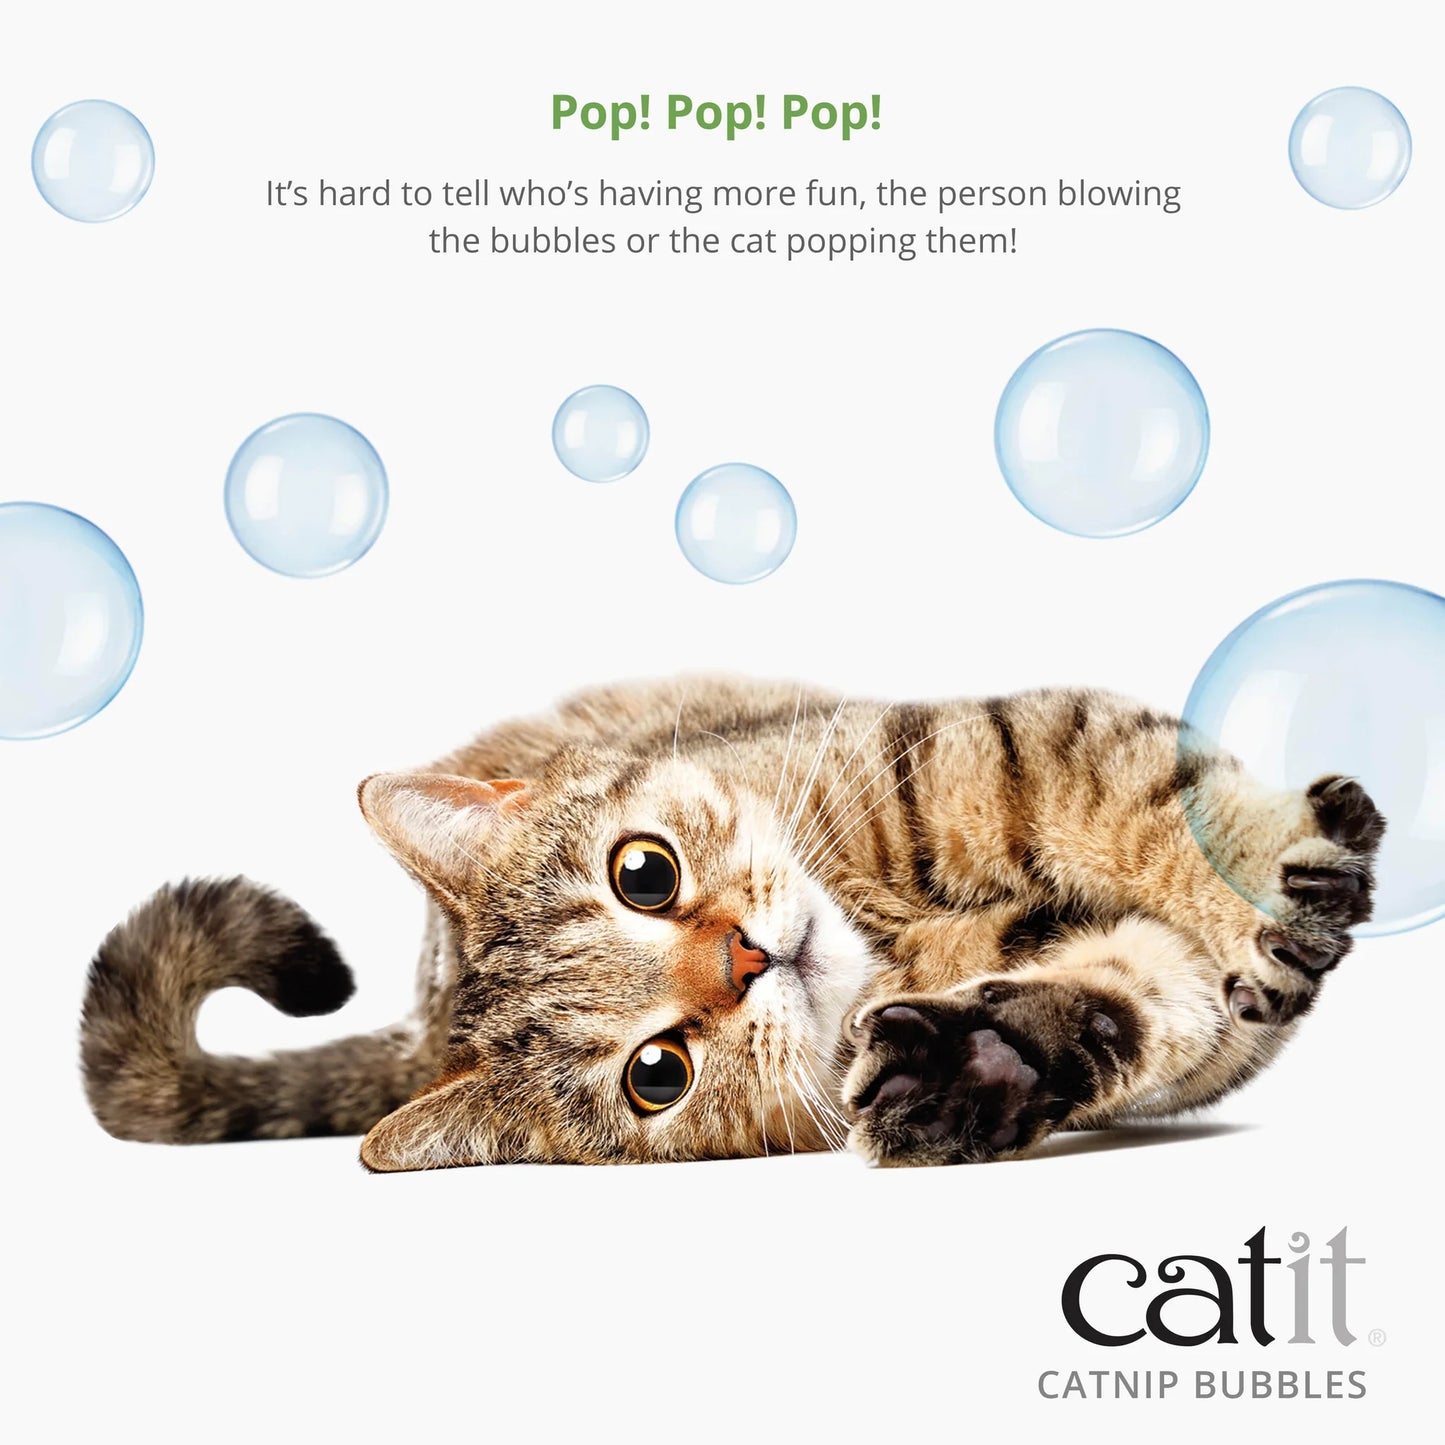 Catit Catnip Bubbles